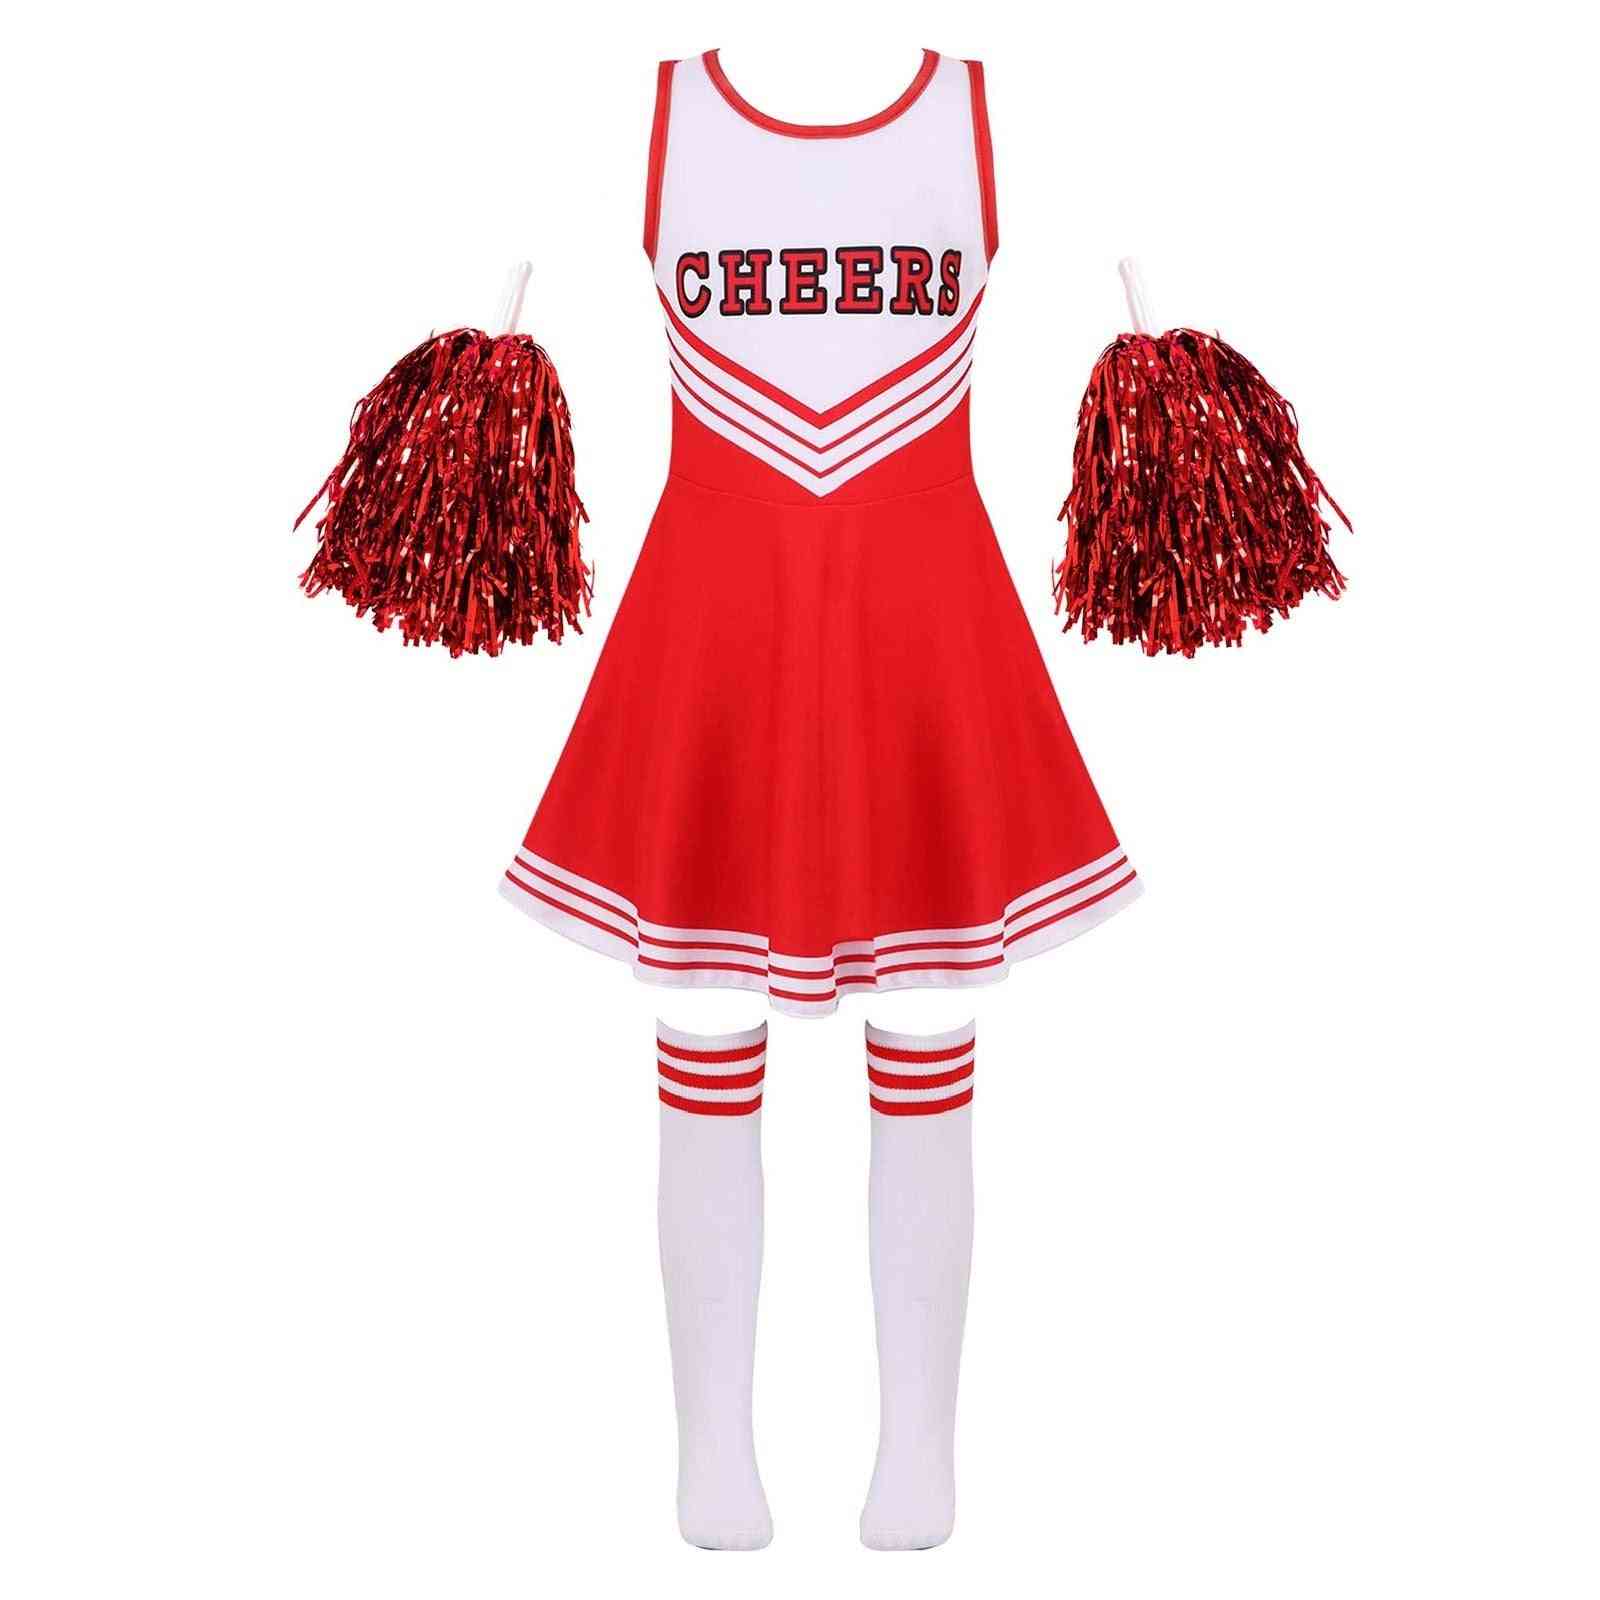 Barn cheerleading dans kostymer